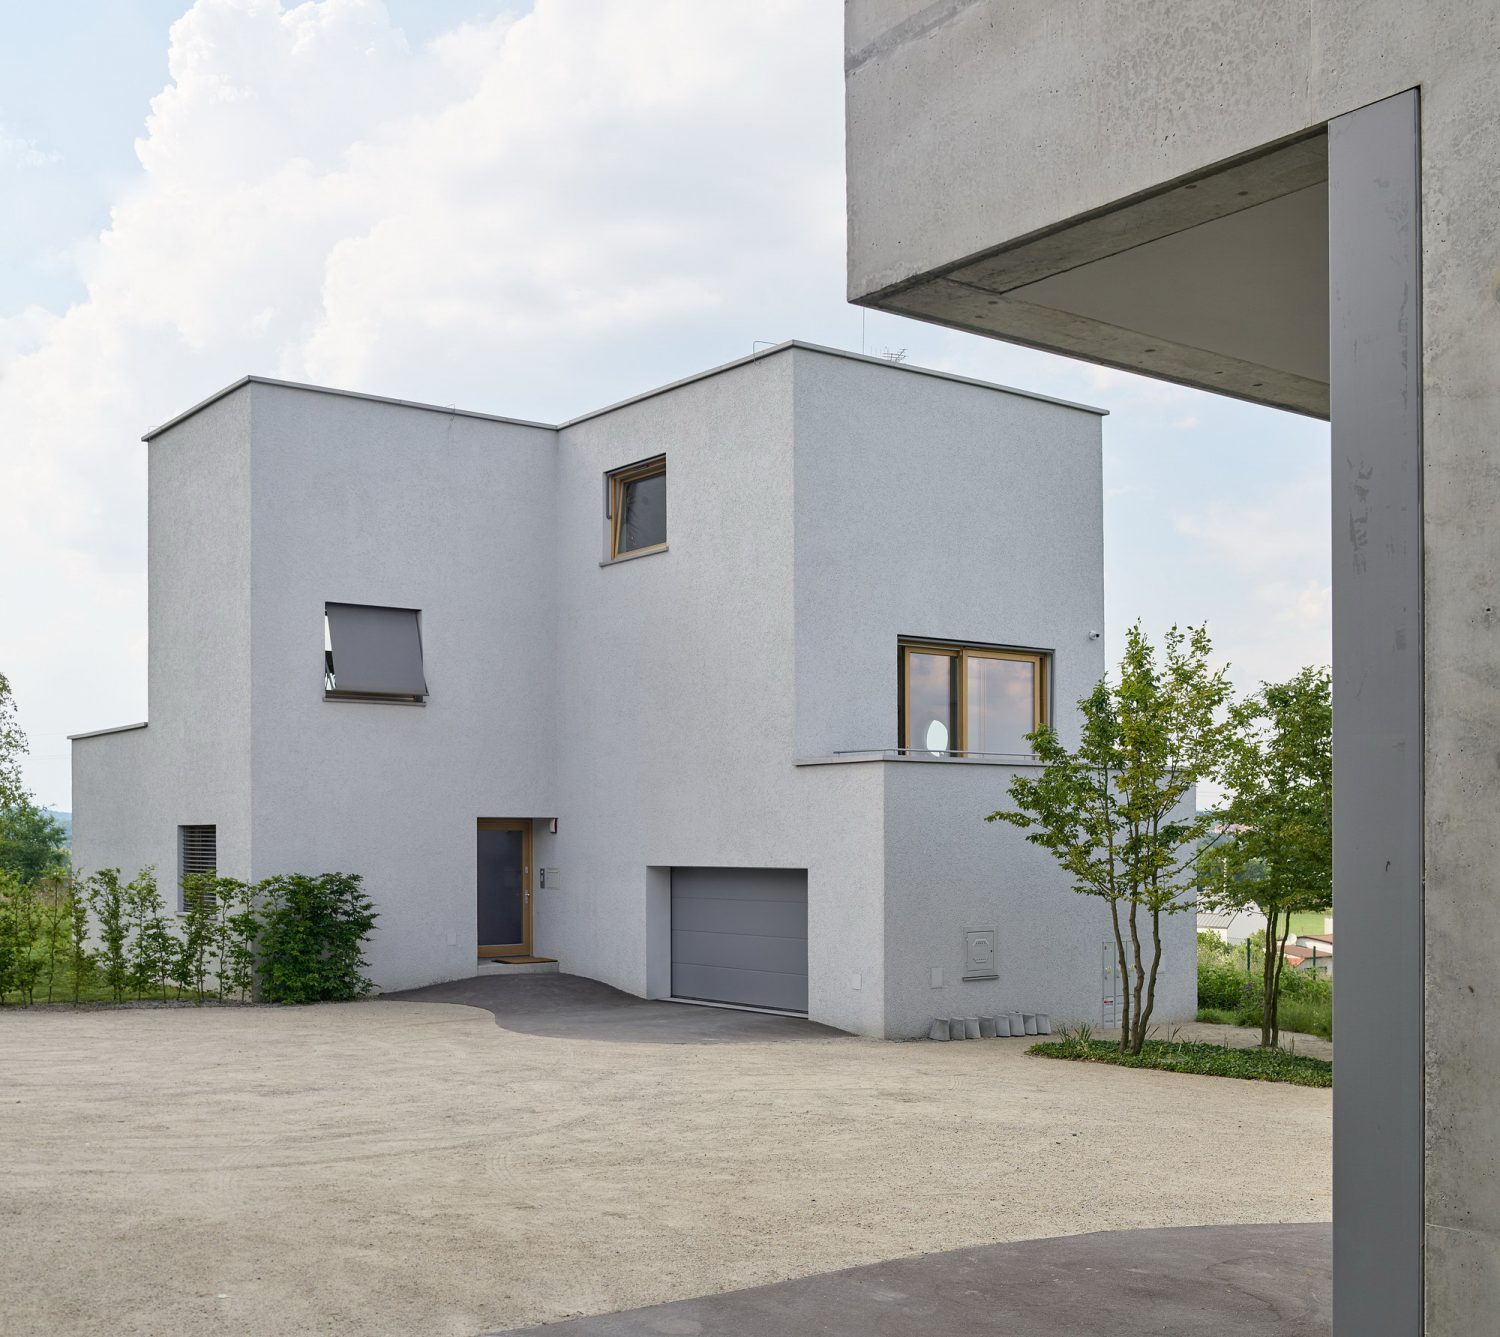 Artists’ Home and Studio by Piotr Brzoza Architekten